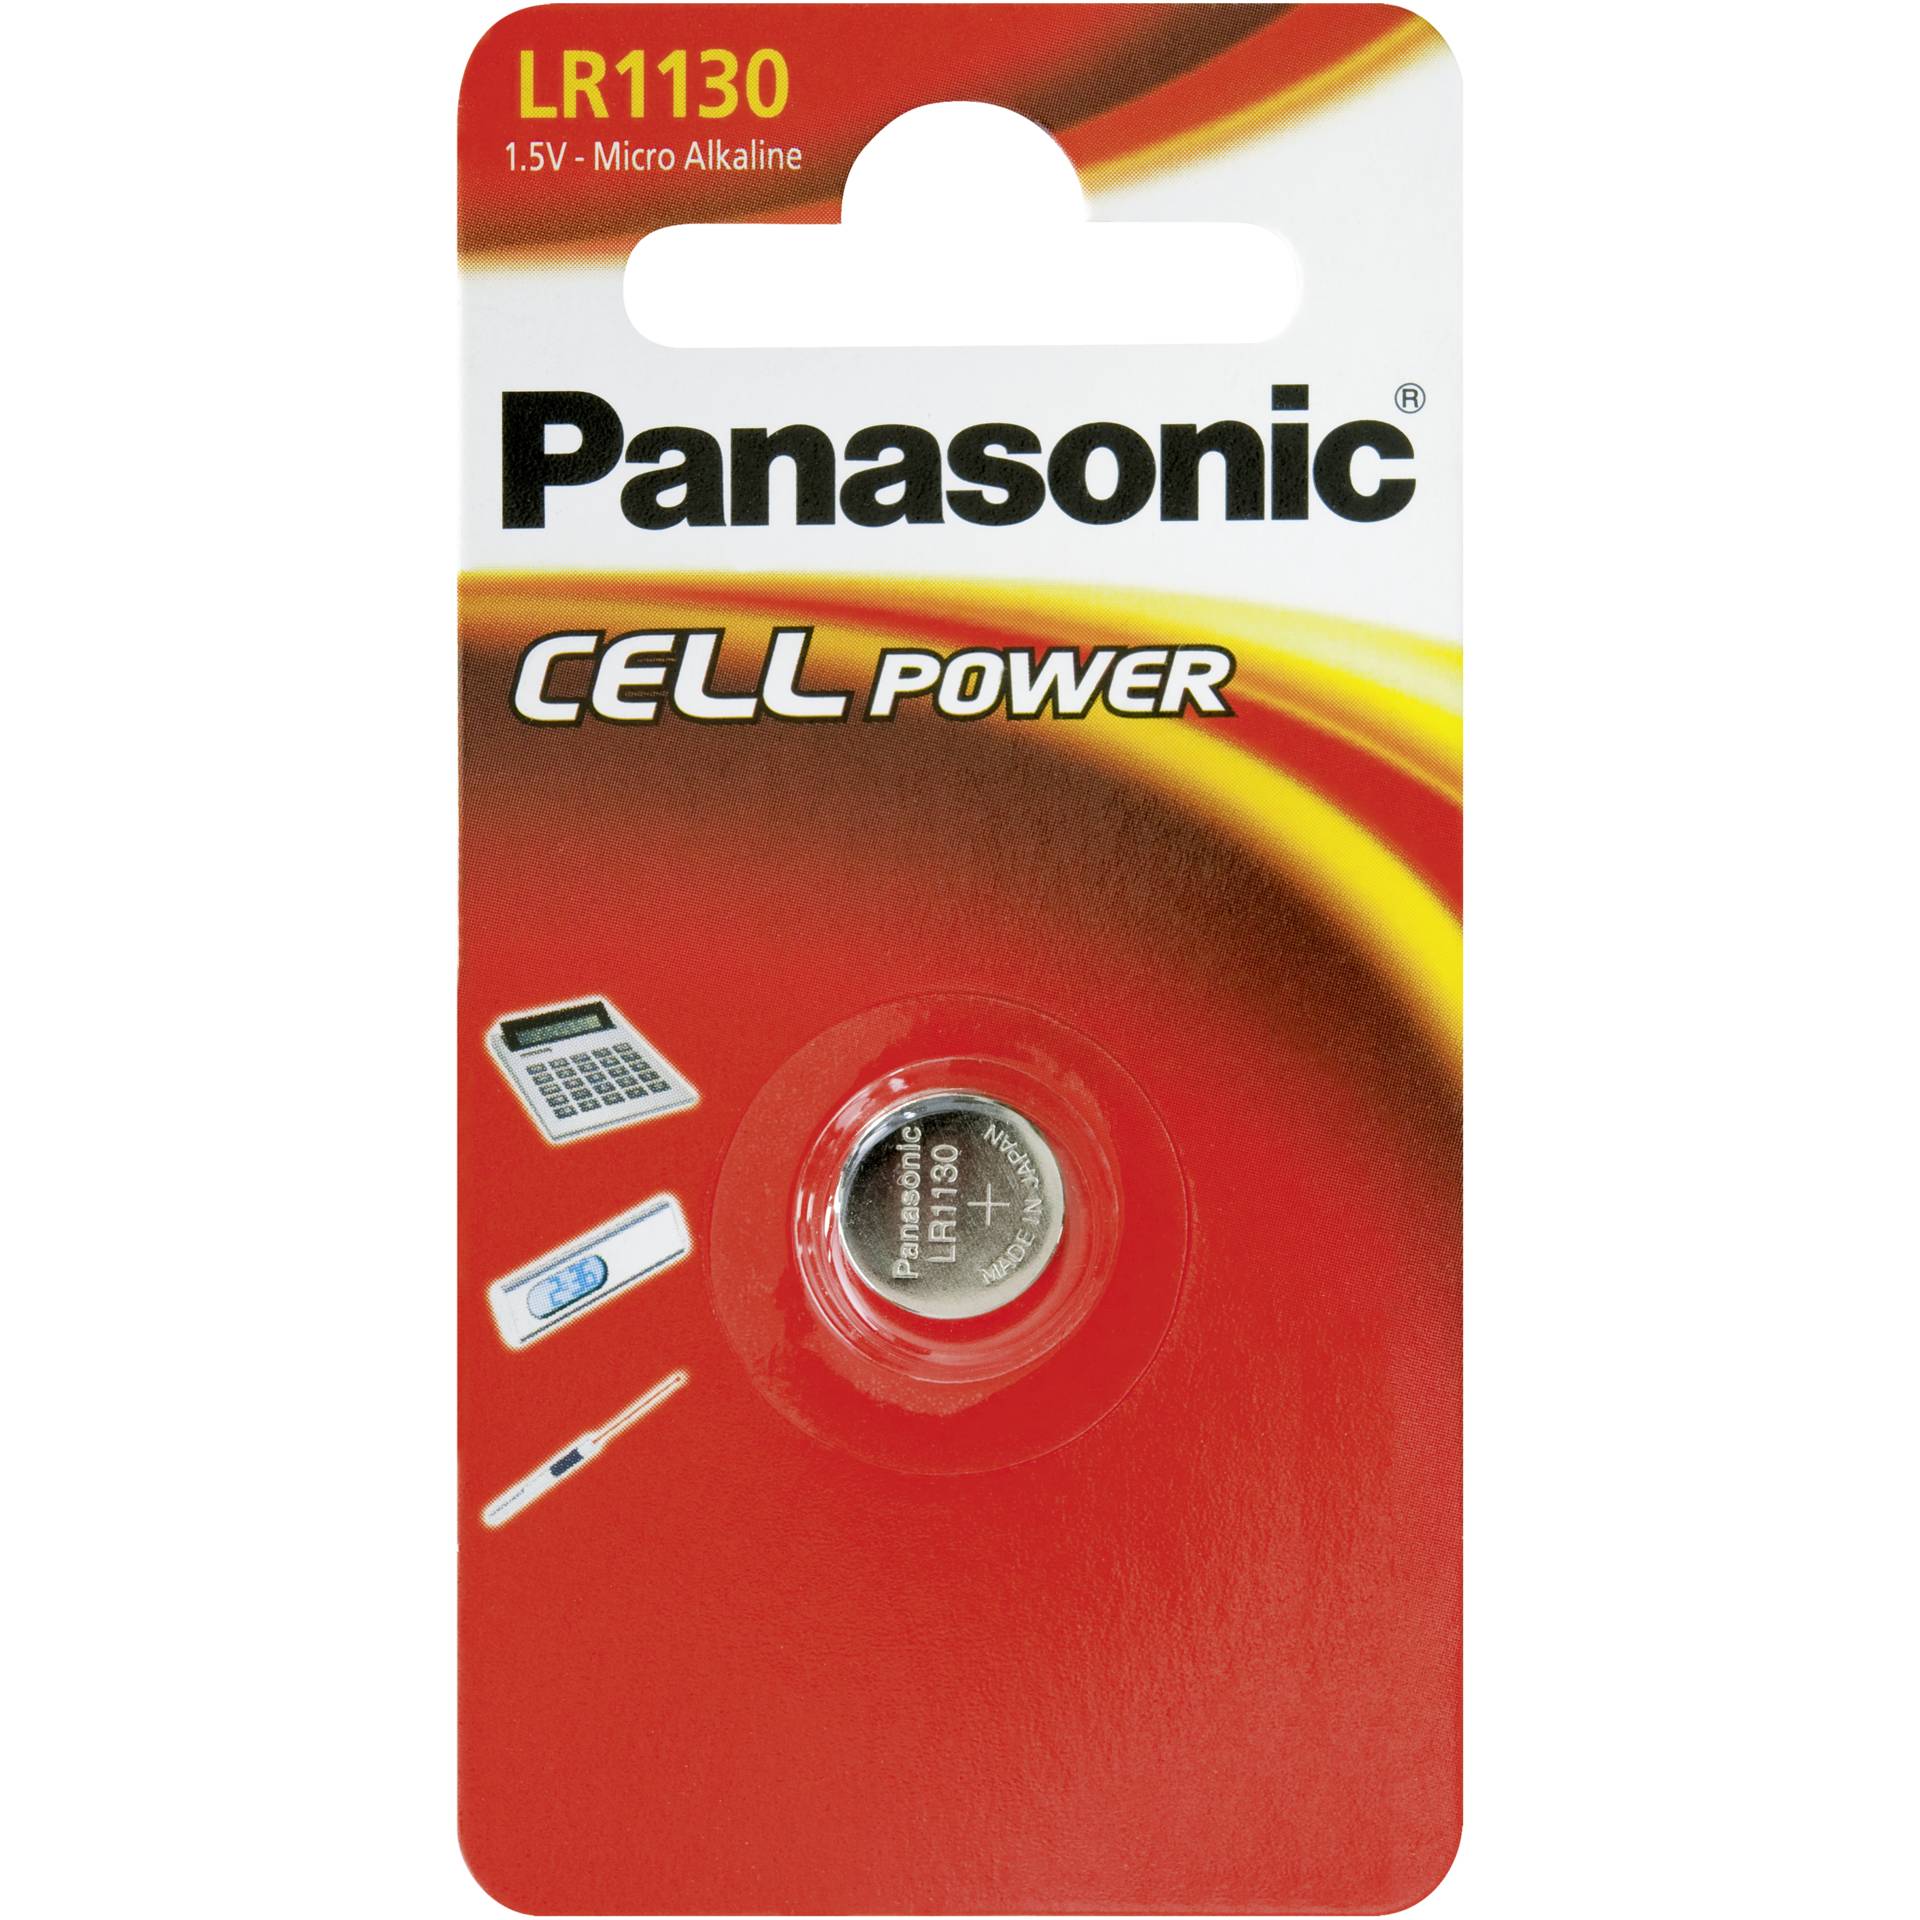 1 Panasonic LR 1130